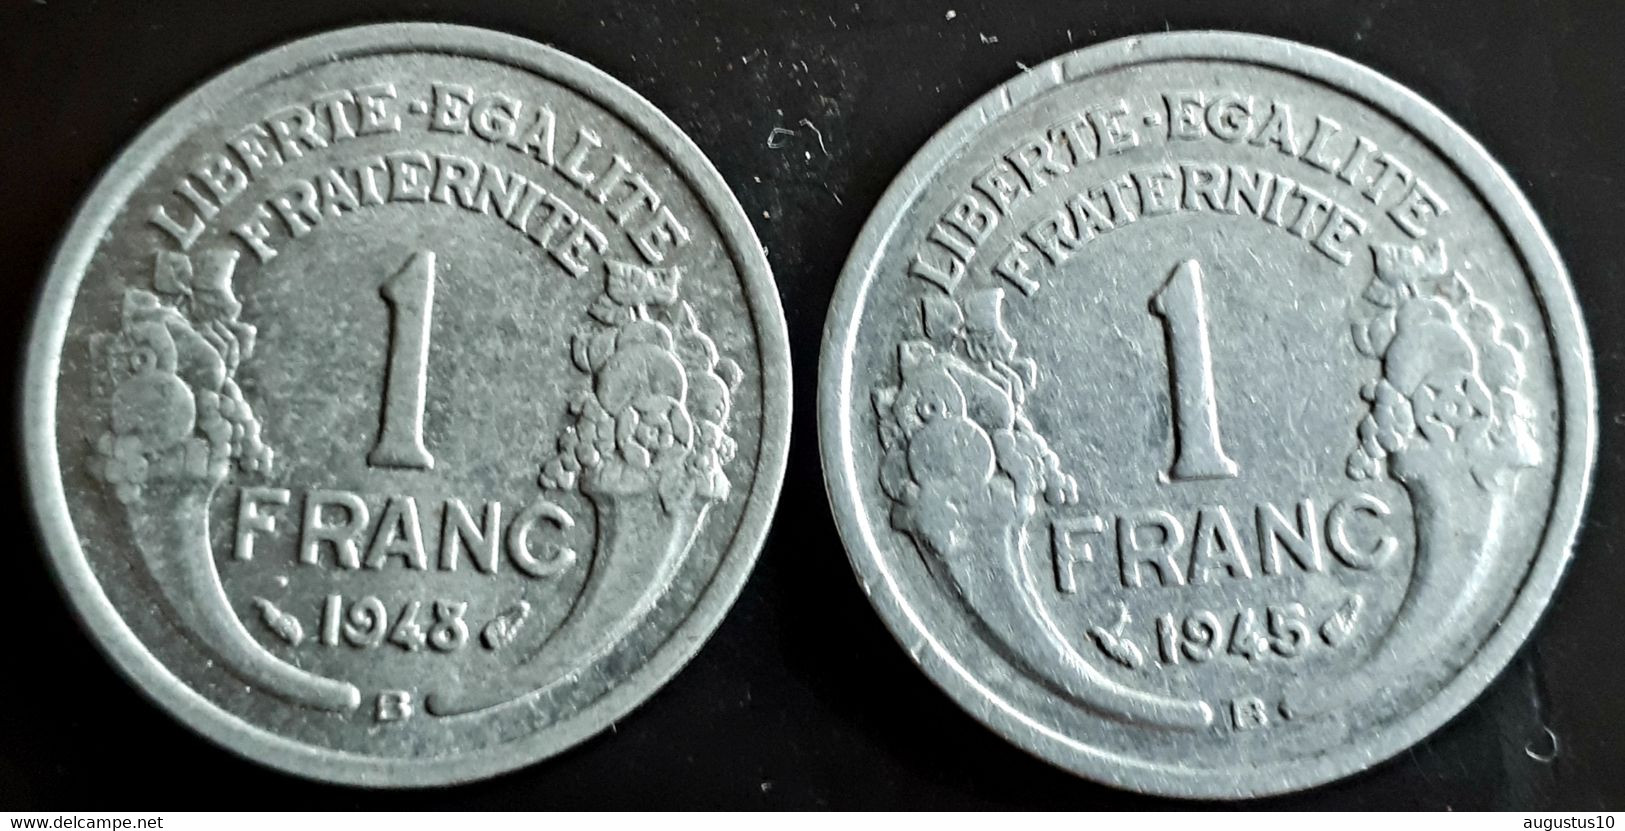 FRANCE: 2 X 1 FRANC SCARCE 1945 B + 1948 B  KM 885a.2 - 1 Franc